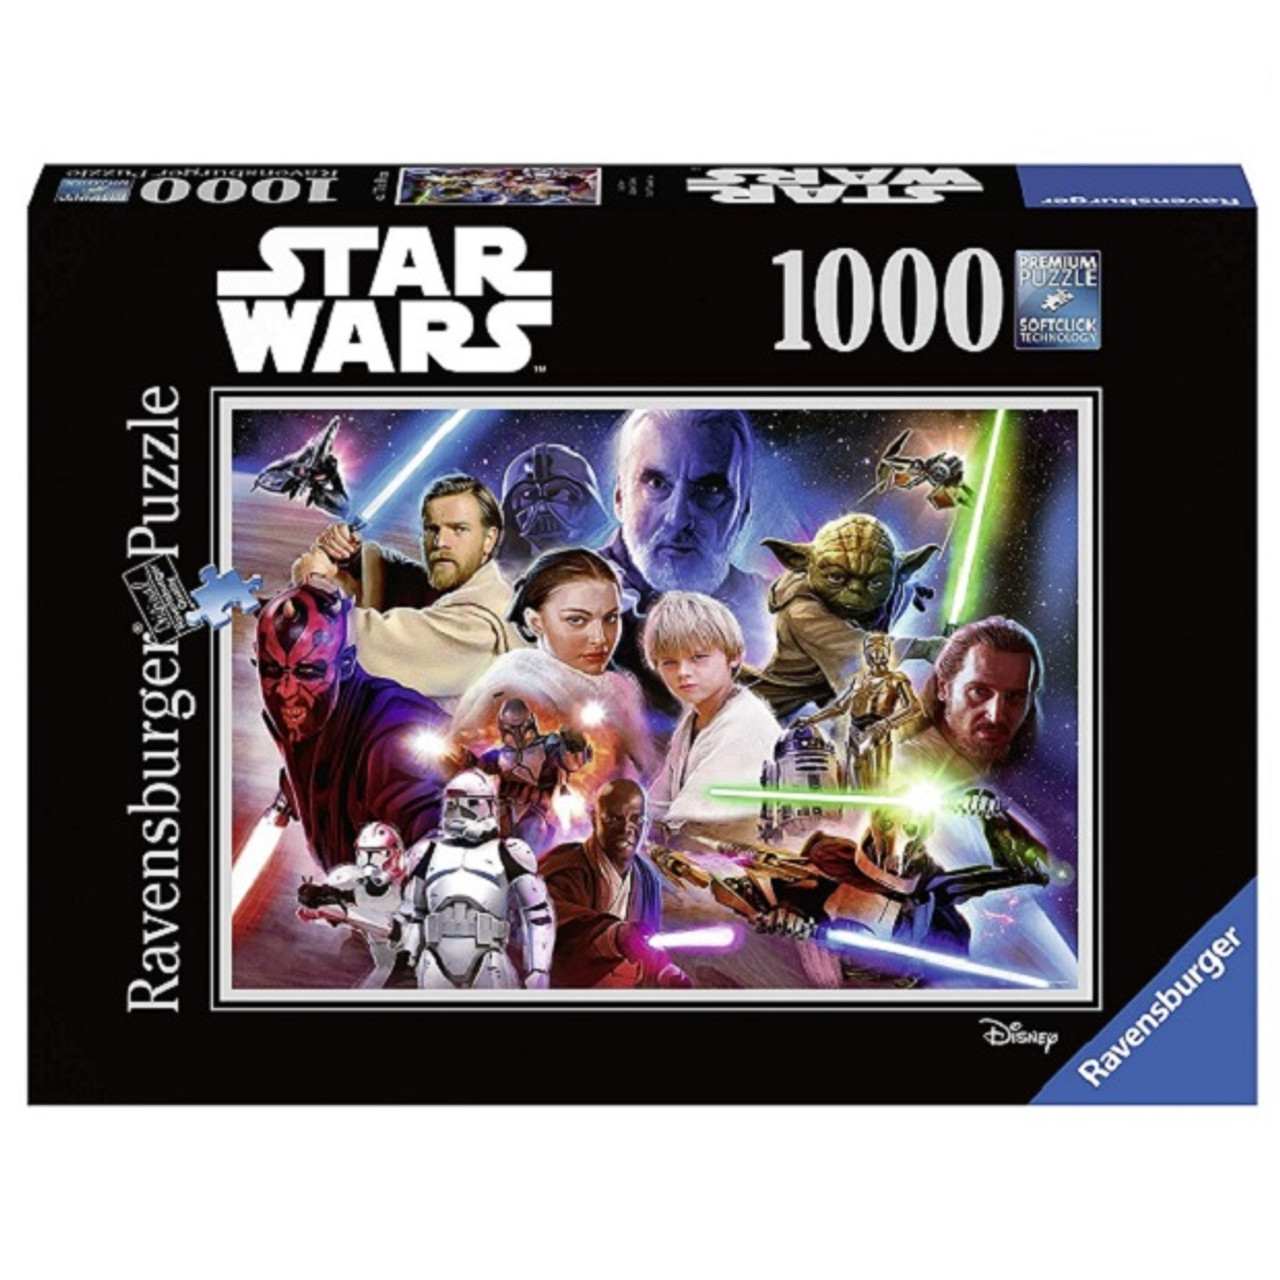 Star Wars PREQUEL Trilogy 1000 Piece Puzzle by Ravensburger 